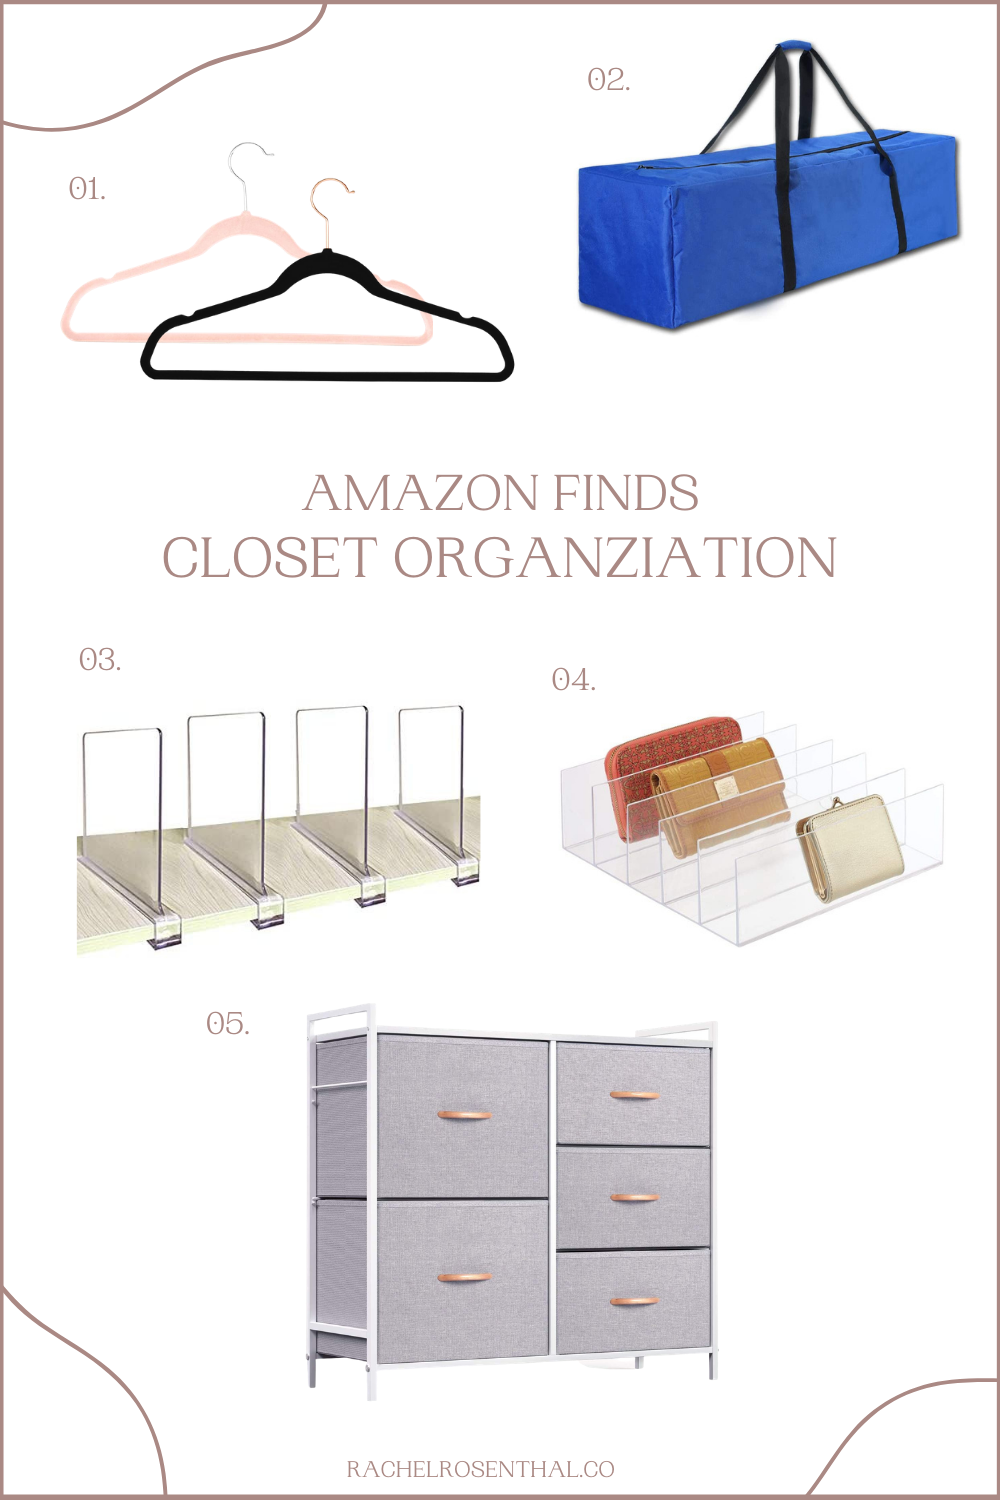 AmazonFindsClosetOrganization_RachelRosenthal.png